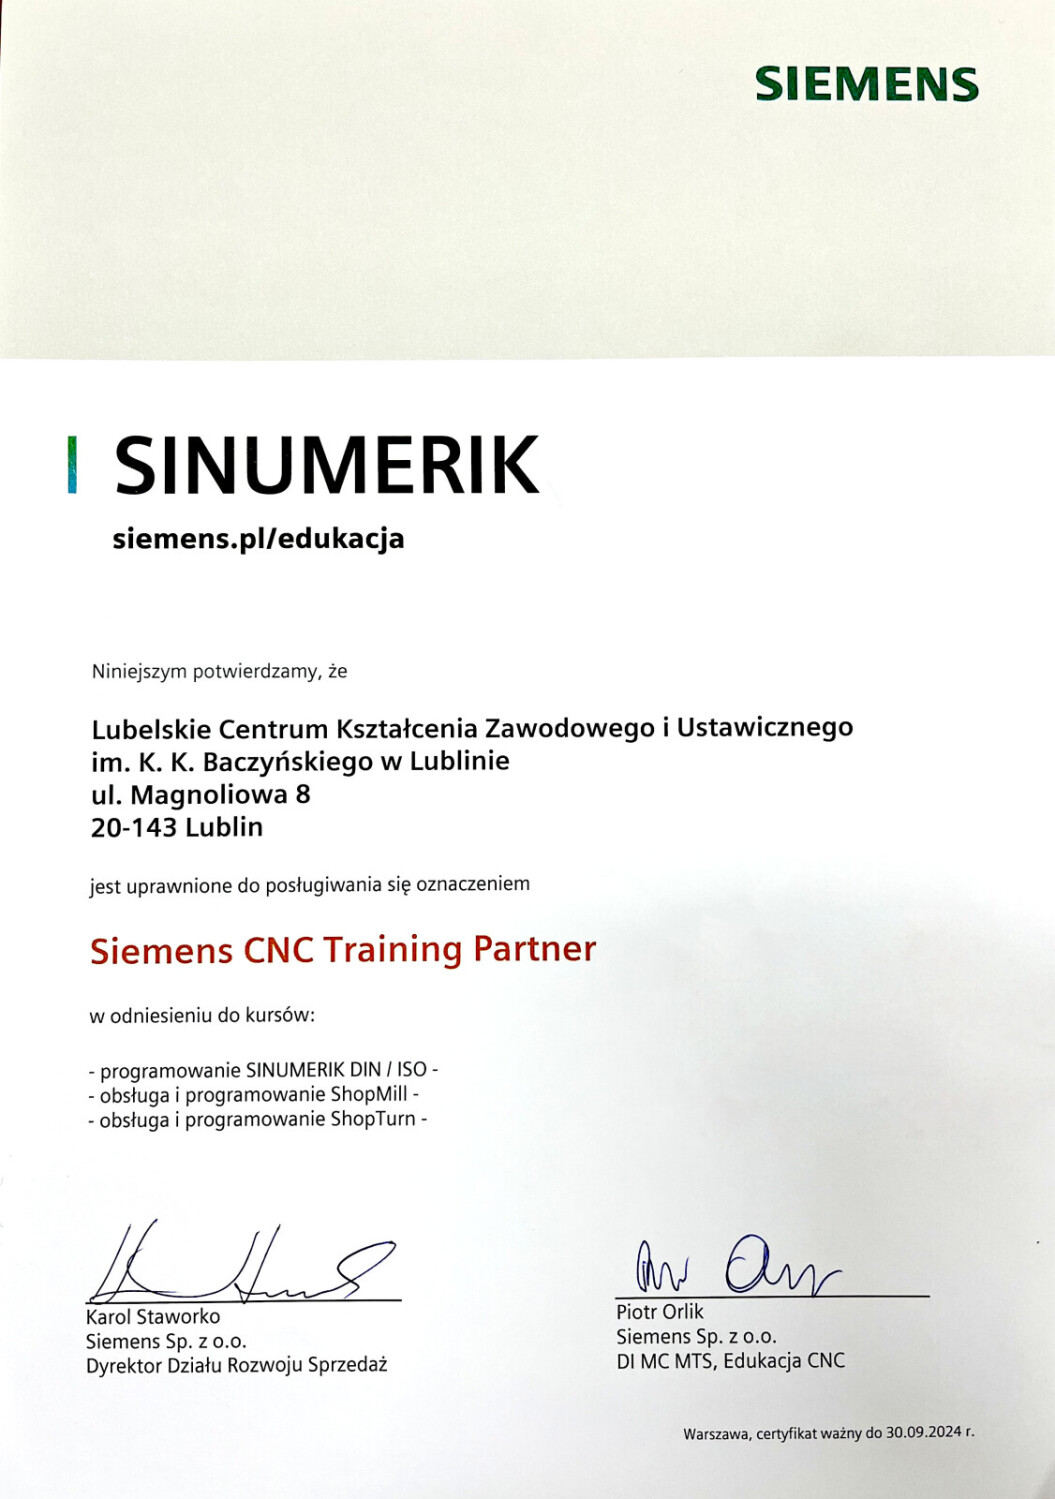 List Siemens CNC Training Partner